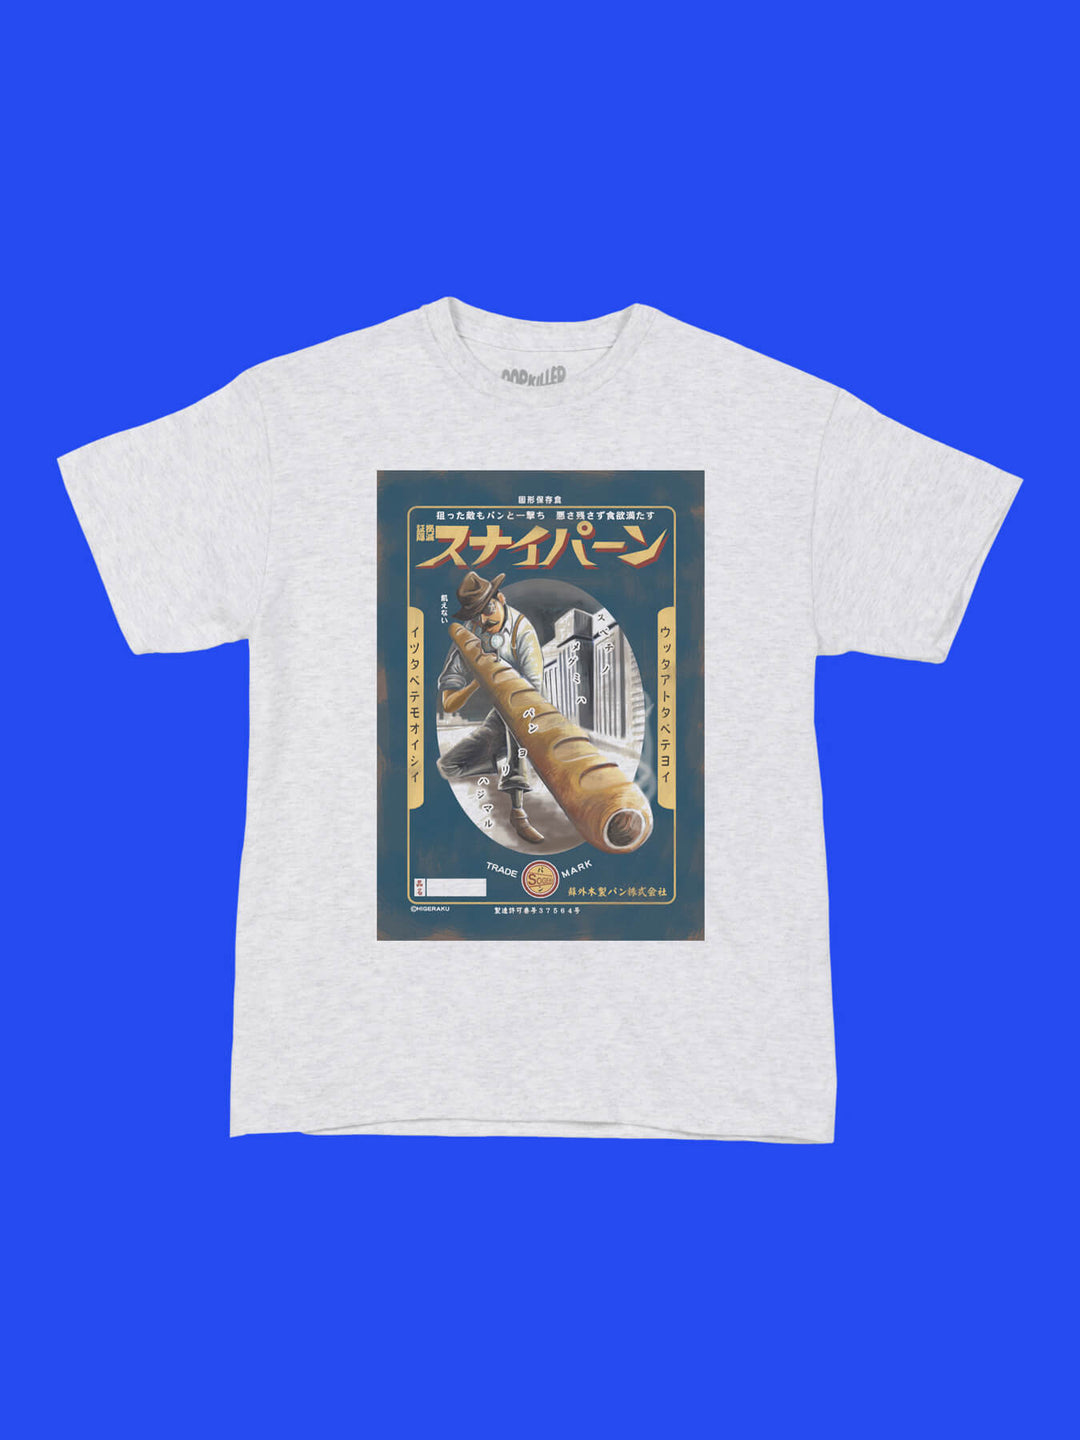 Japanese assassin illustrated t-shirt.